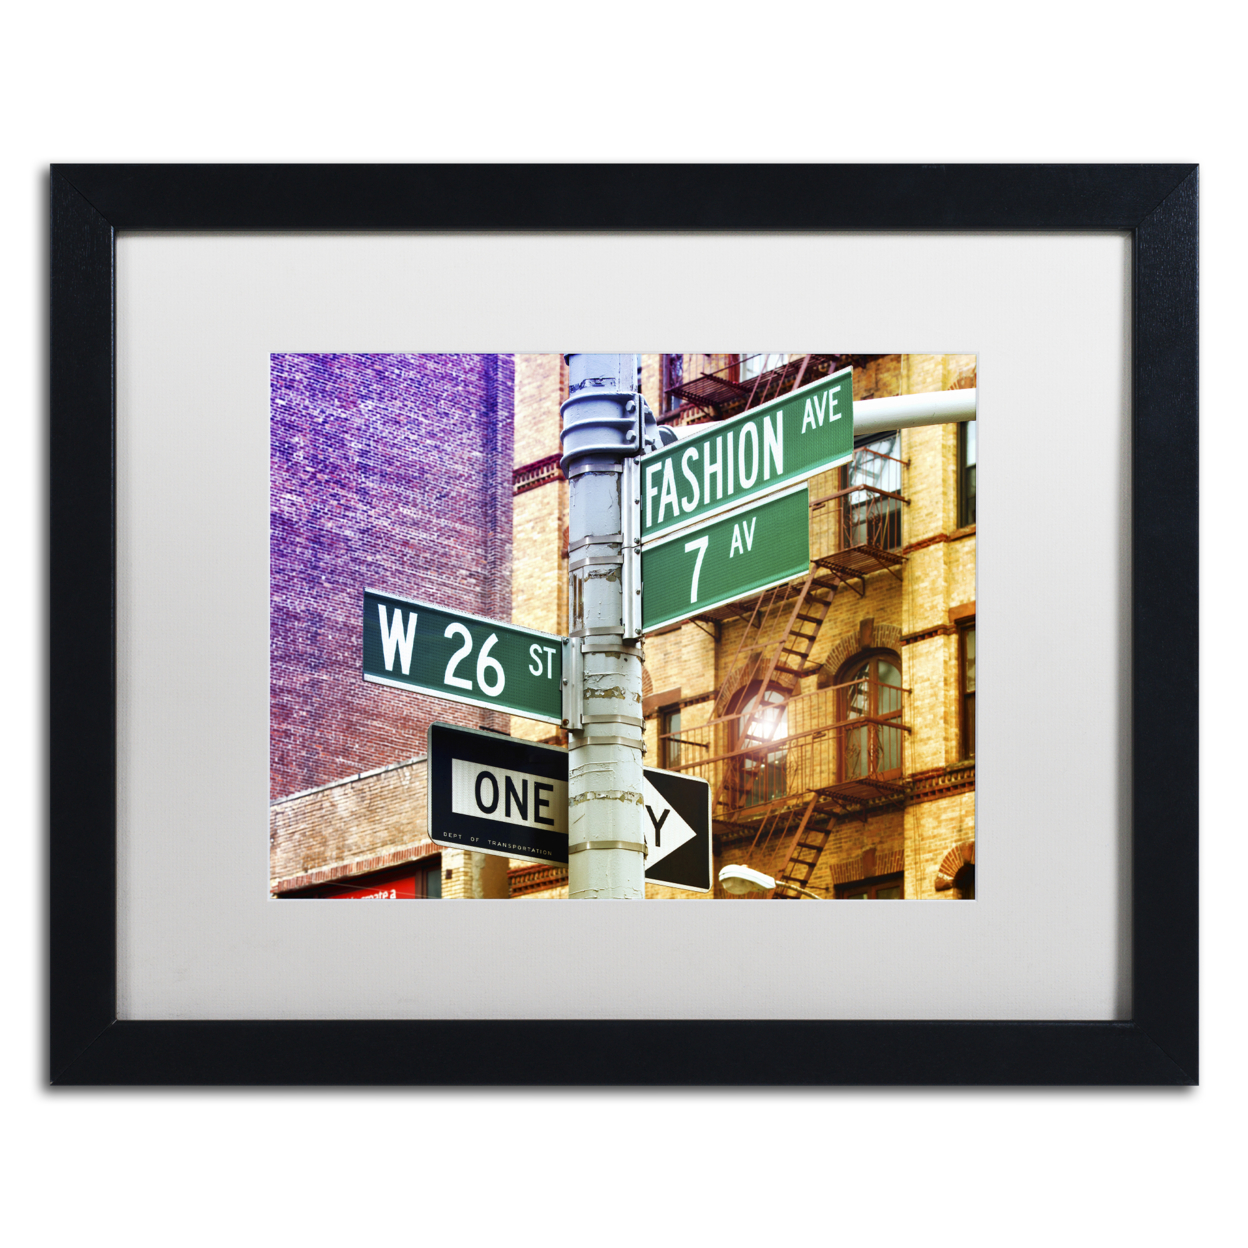 Philippe Hugonnard 'Fashion Avenue New York' Black Wooden Framed Art 18 X 22 Inches